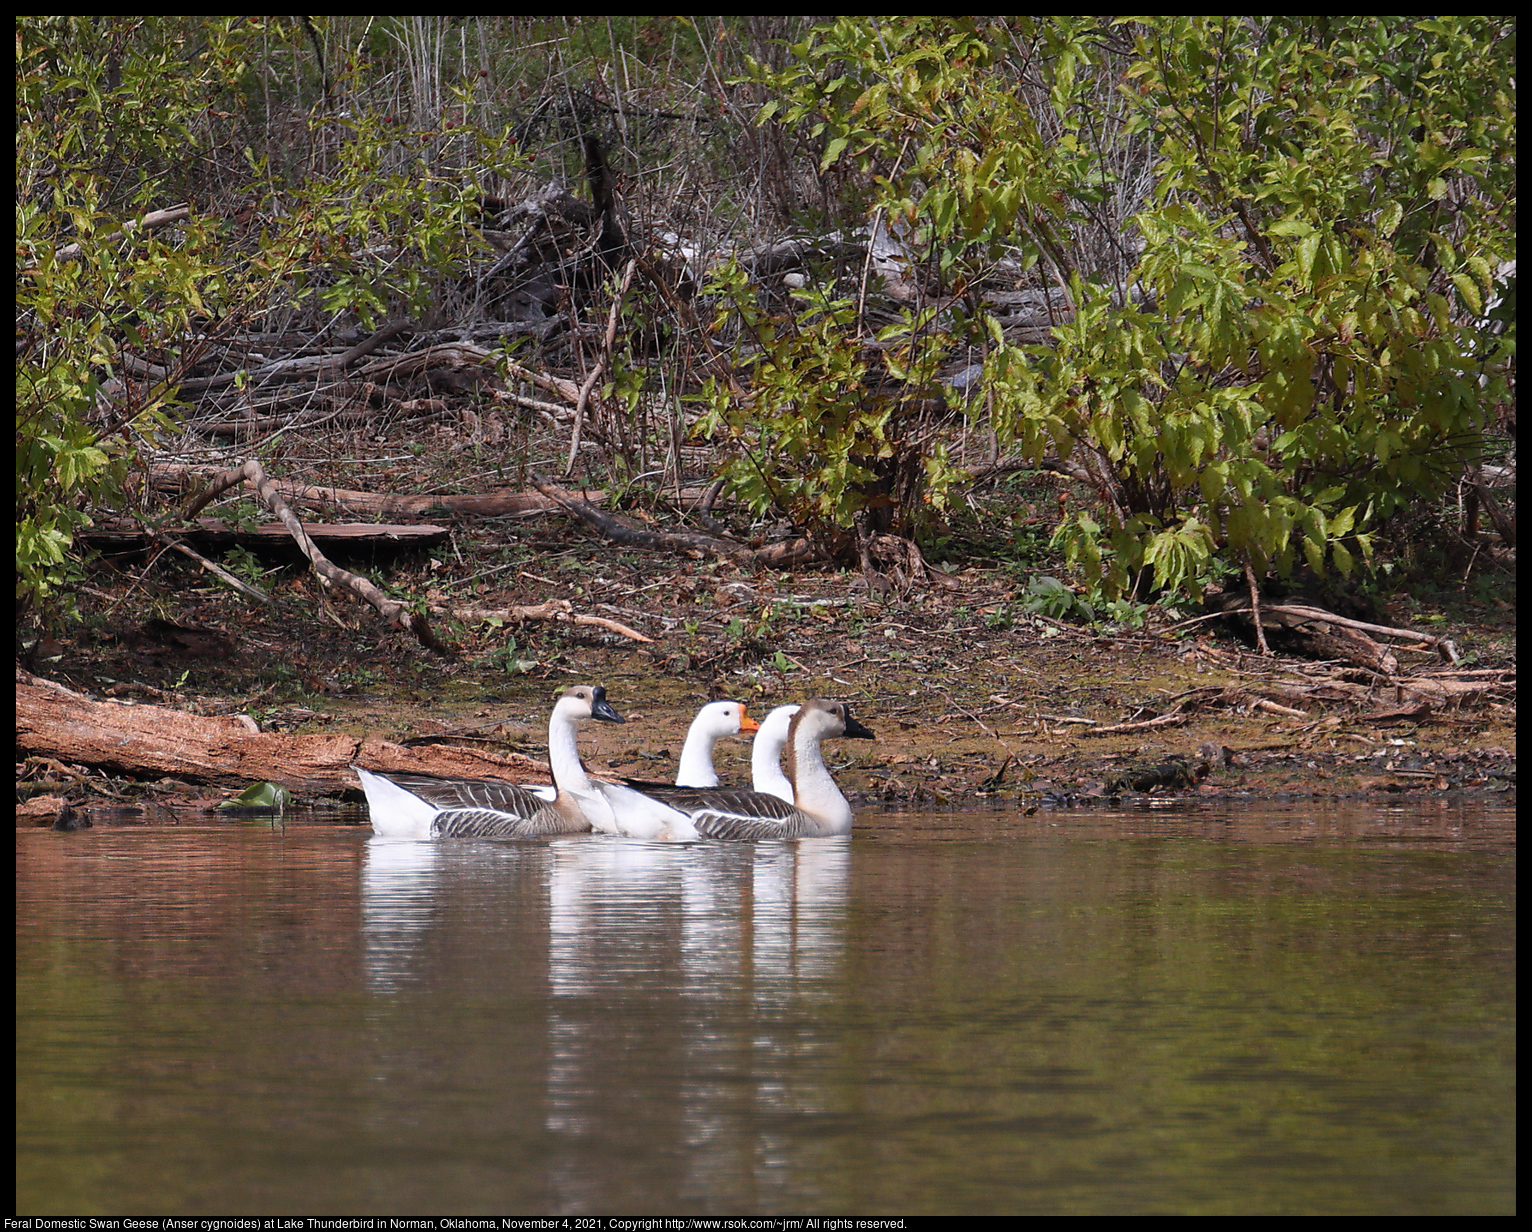 Feral Domestic Swan Geese (Anser cygnoides) at Lake Thunderbird in Norman, Oklahoma, November 4, 2021